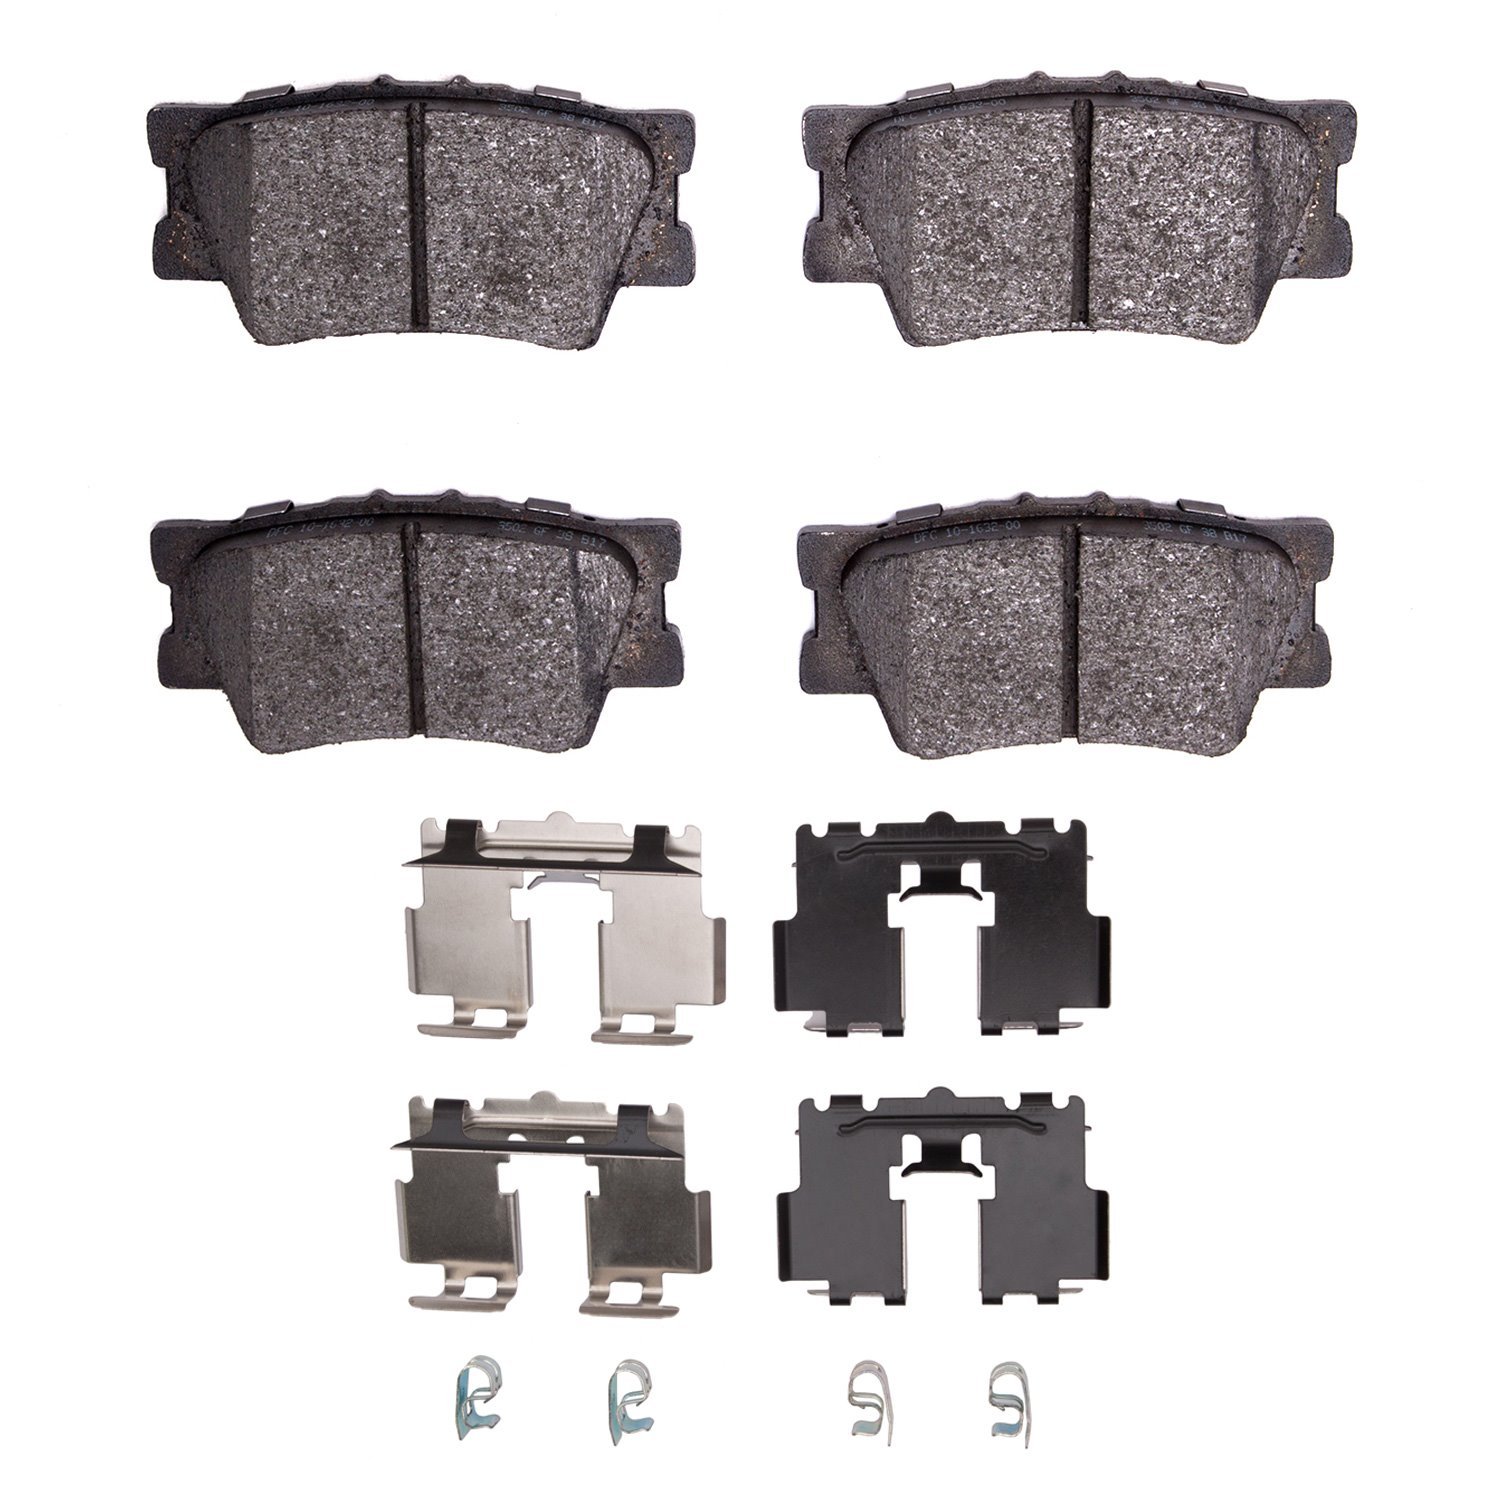 1310-1632-02 3000-Series Ceramic Brake Pads & Hardware Kit, Fits Select Multiple Makes/Models, Position: Rear